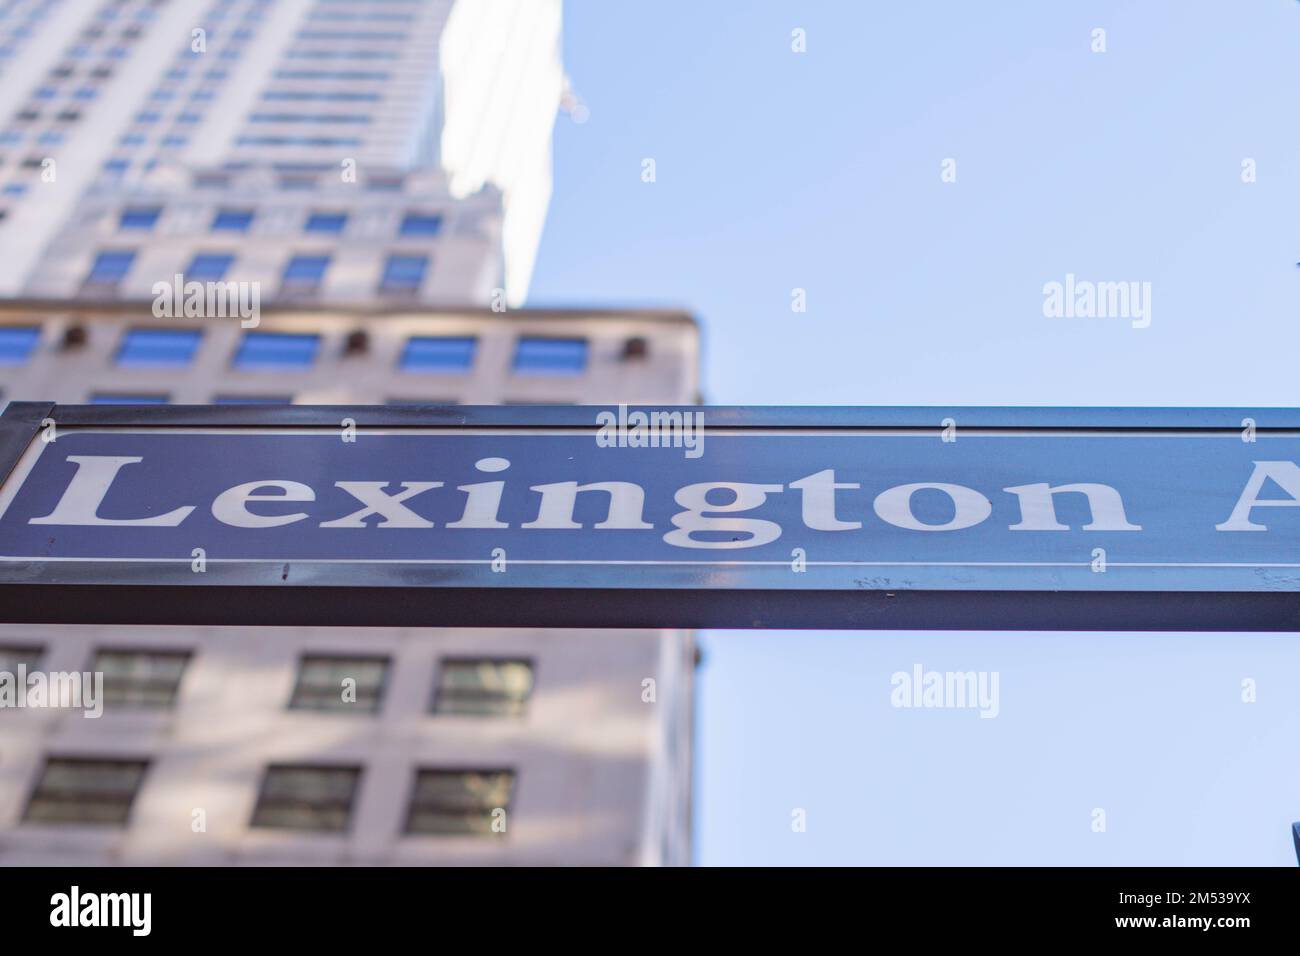 Manhattan lexington ave hi-res stock photography and images - Alamy